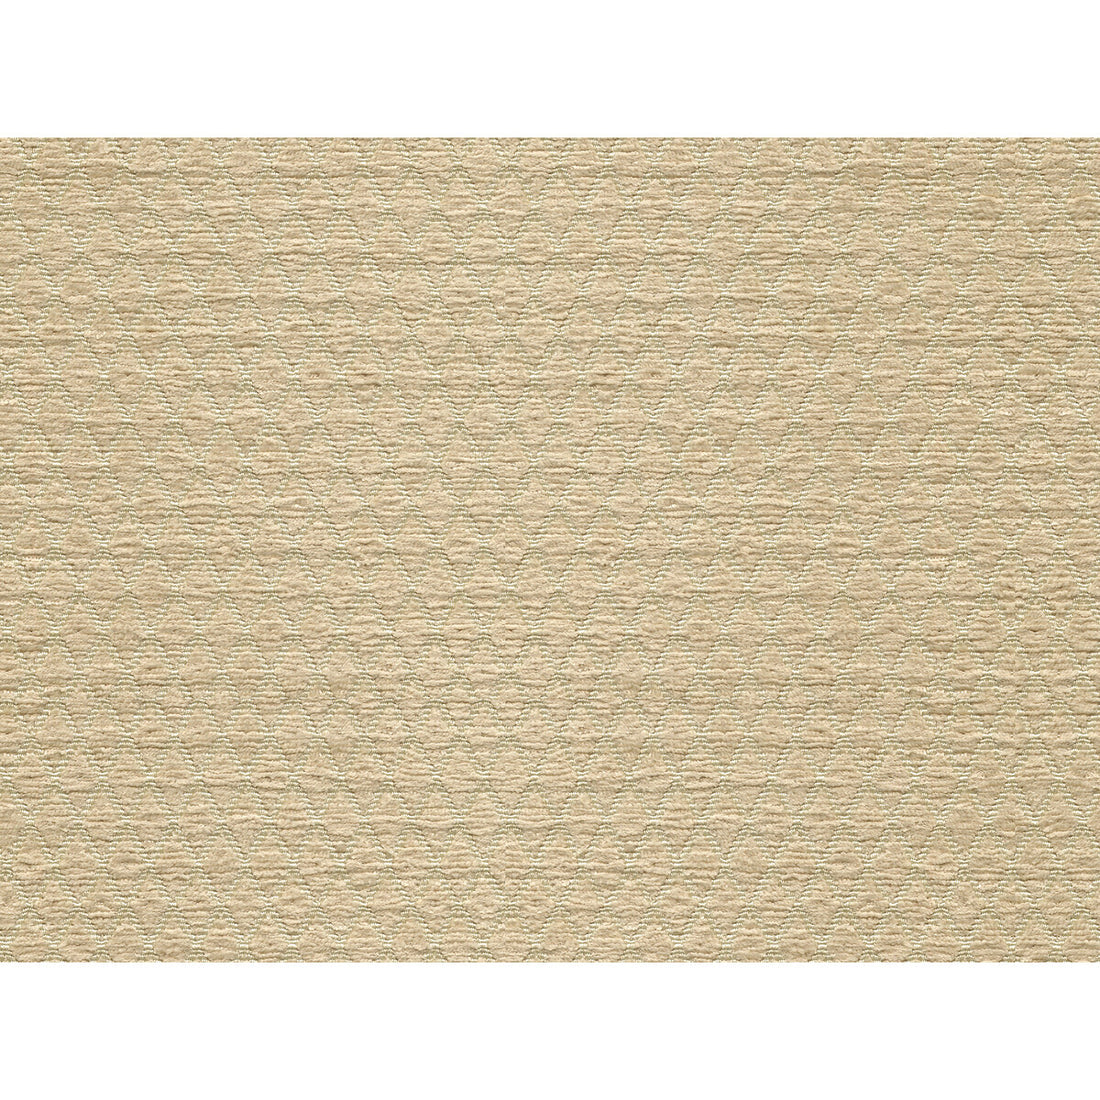 Kravet Smart fabric in 34475-116 color - pattern 34475.116.0 - by Kravet Smart